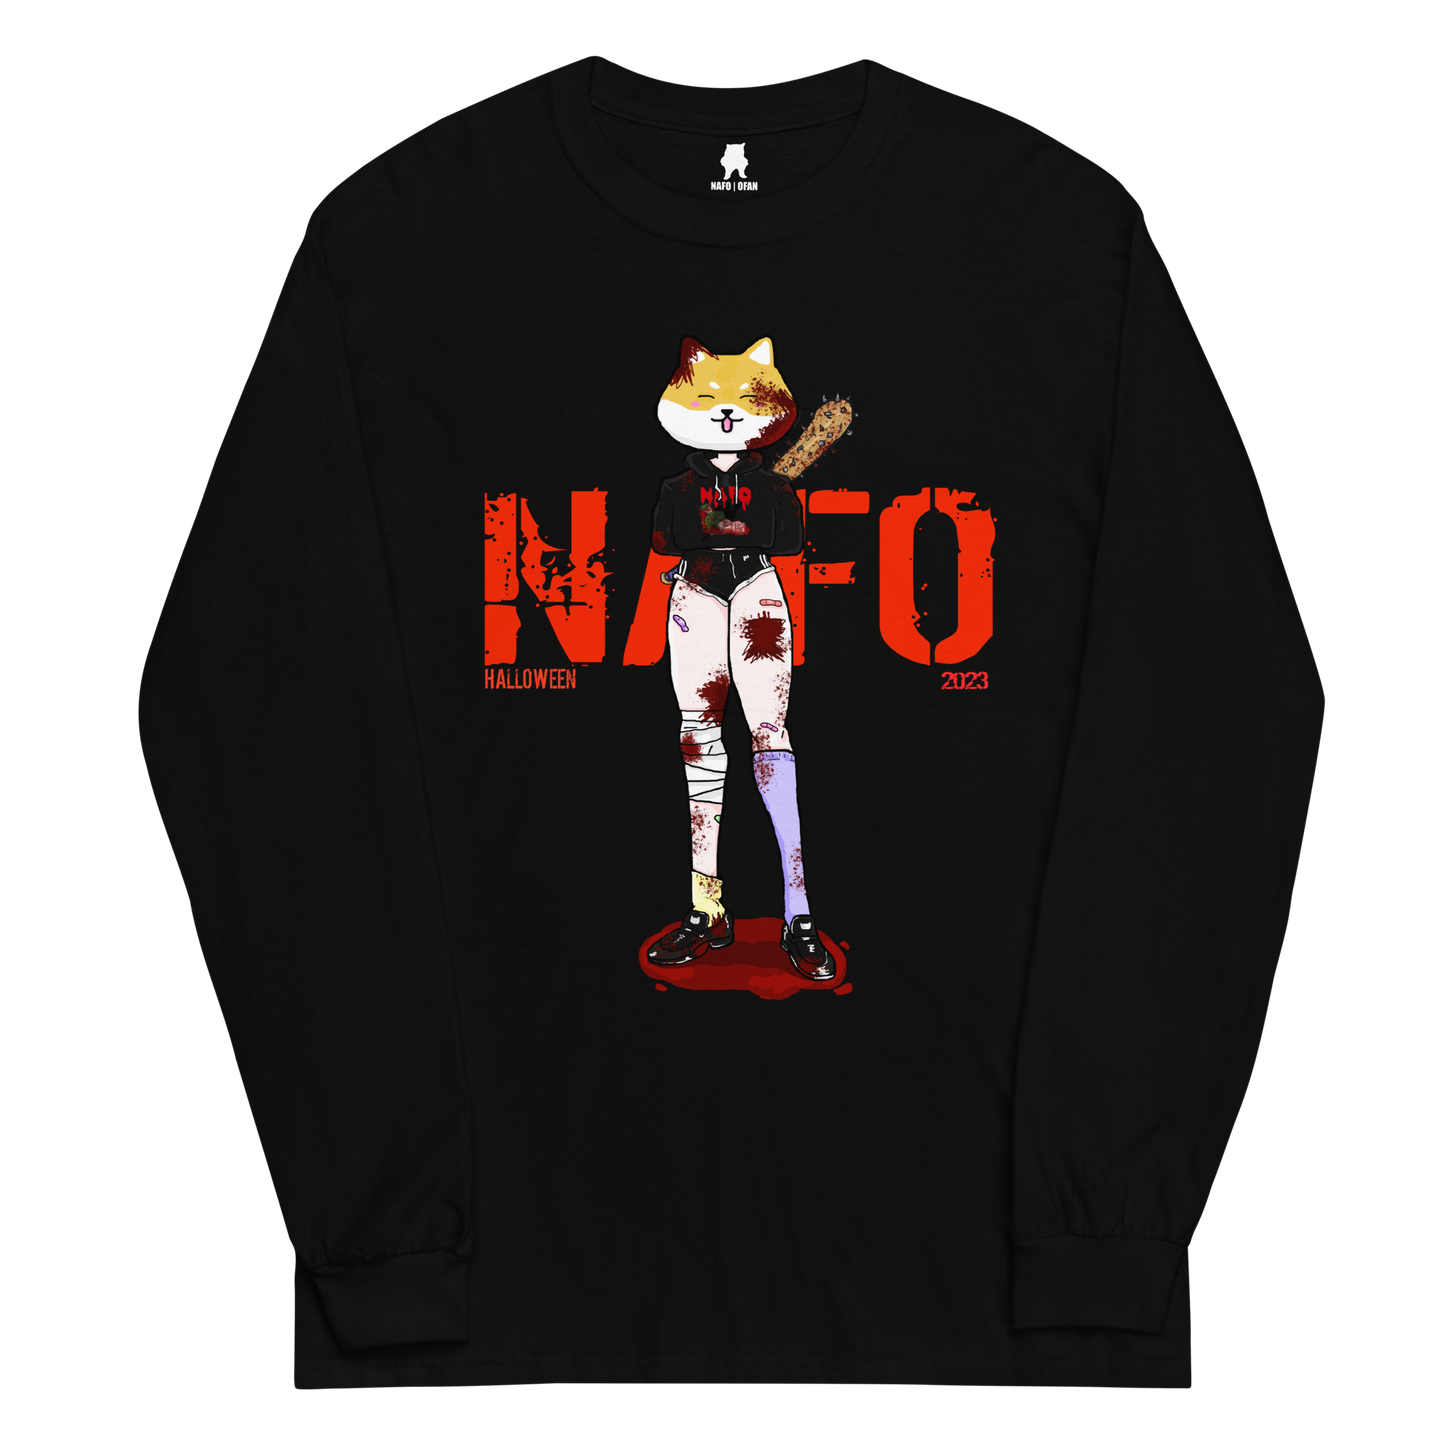 NAFO Take a Swing Long Sleeve T-Shirt